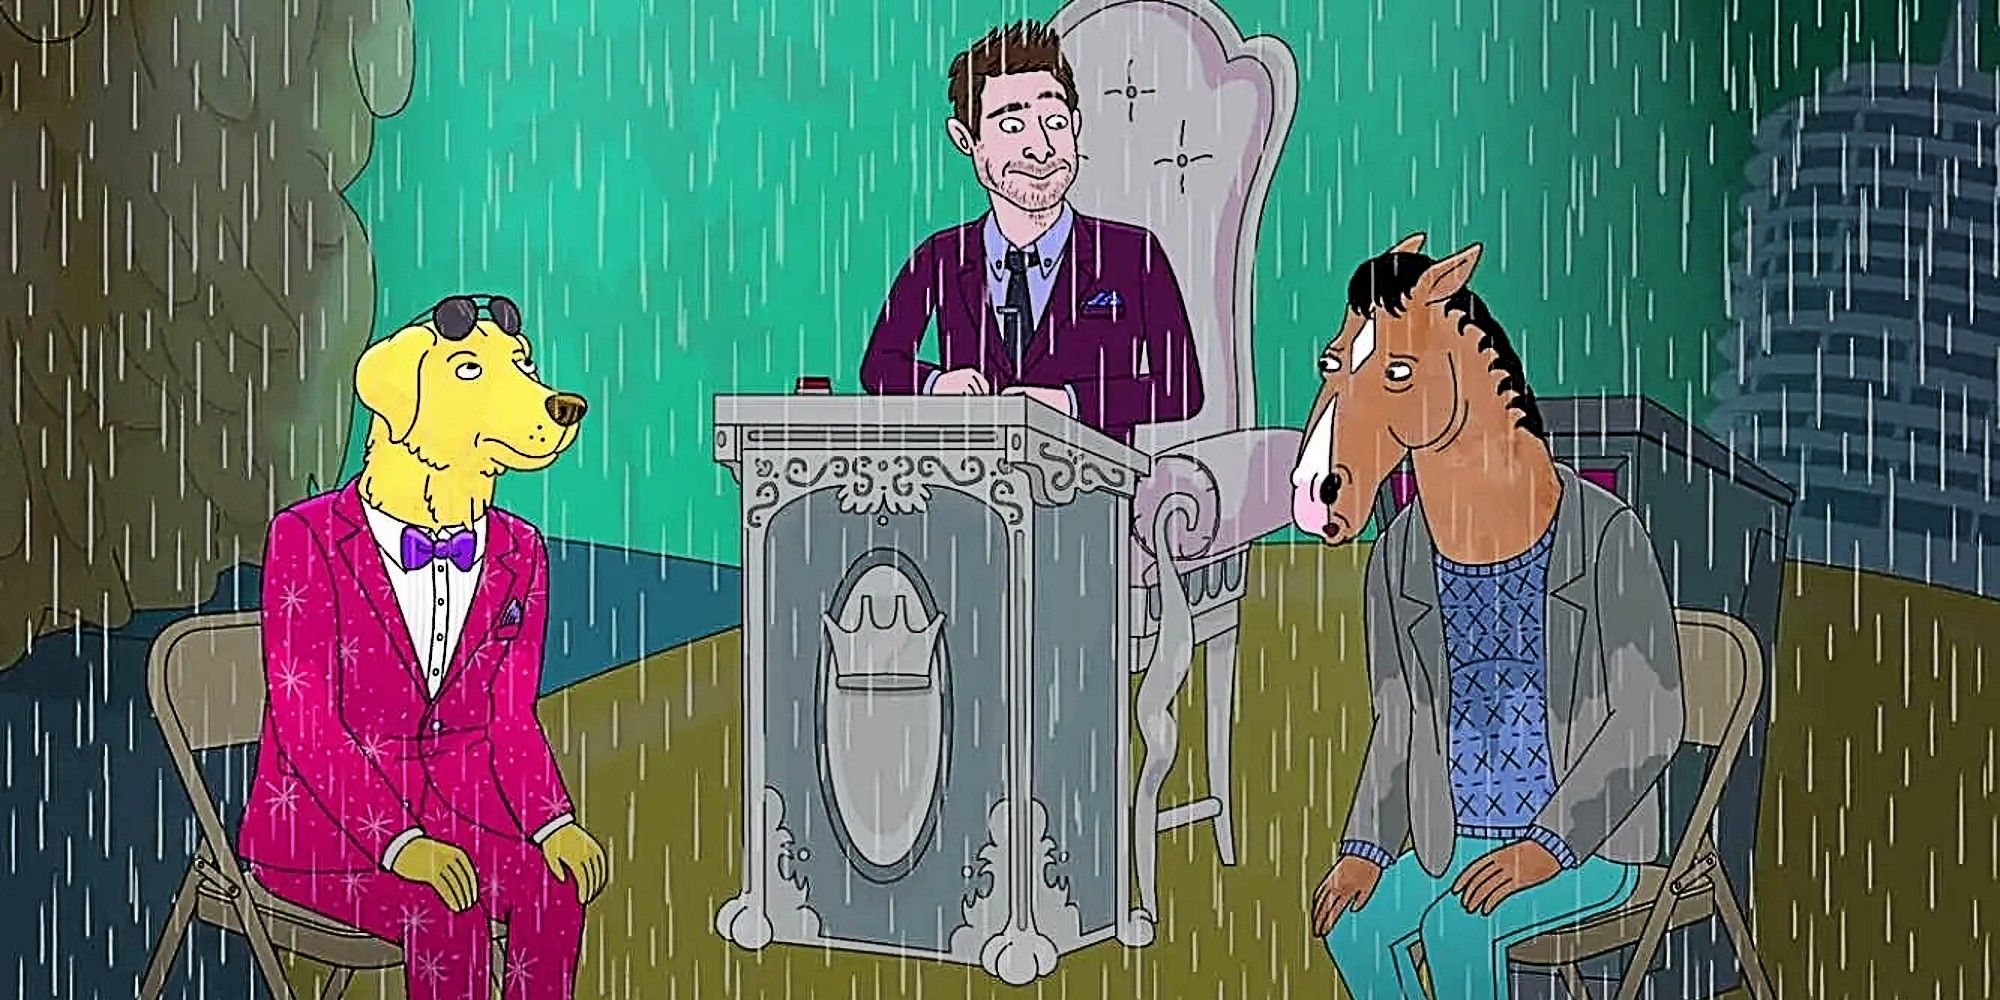 Bojack Horseman and Mr. Peanutbutter talking on 'HSACWDTKDTKTLFO' led by Daniel Radcliffe on Bojack Horseman